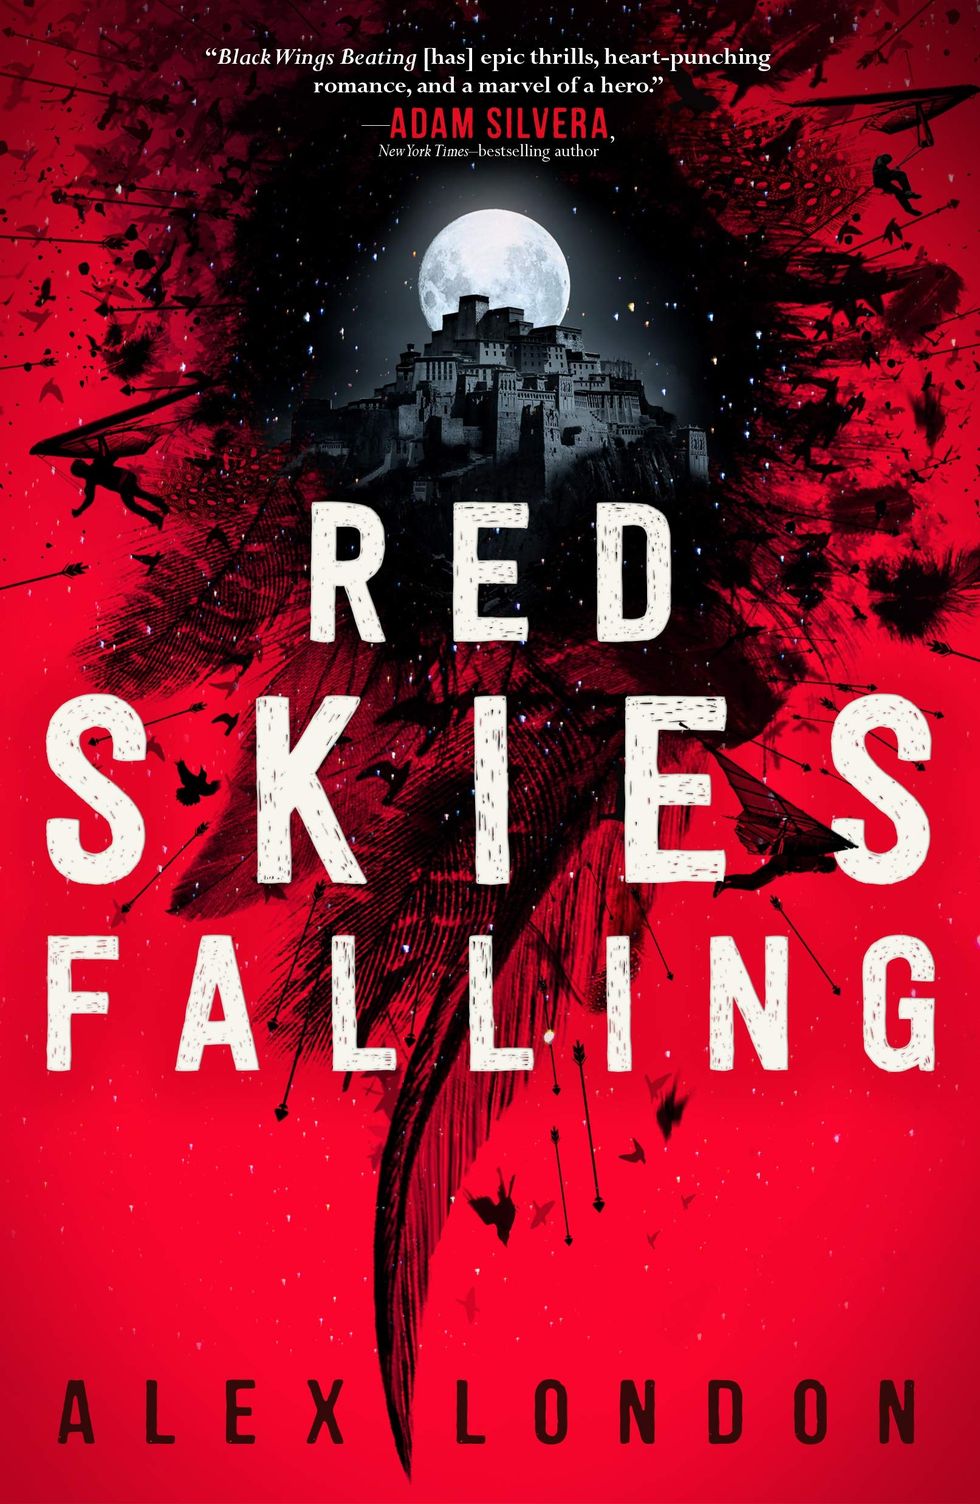 Red Skies Falling by Alex London - Best YA Books of 2019